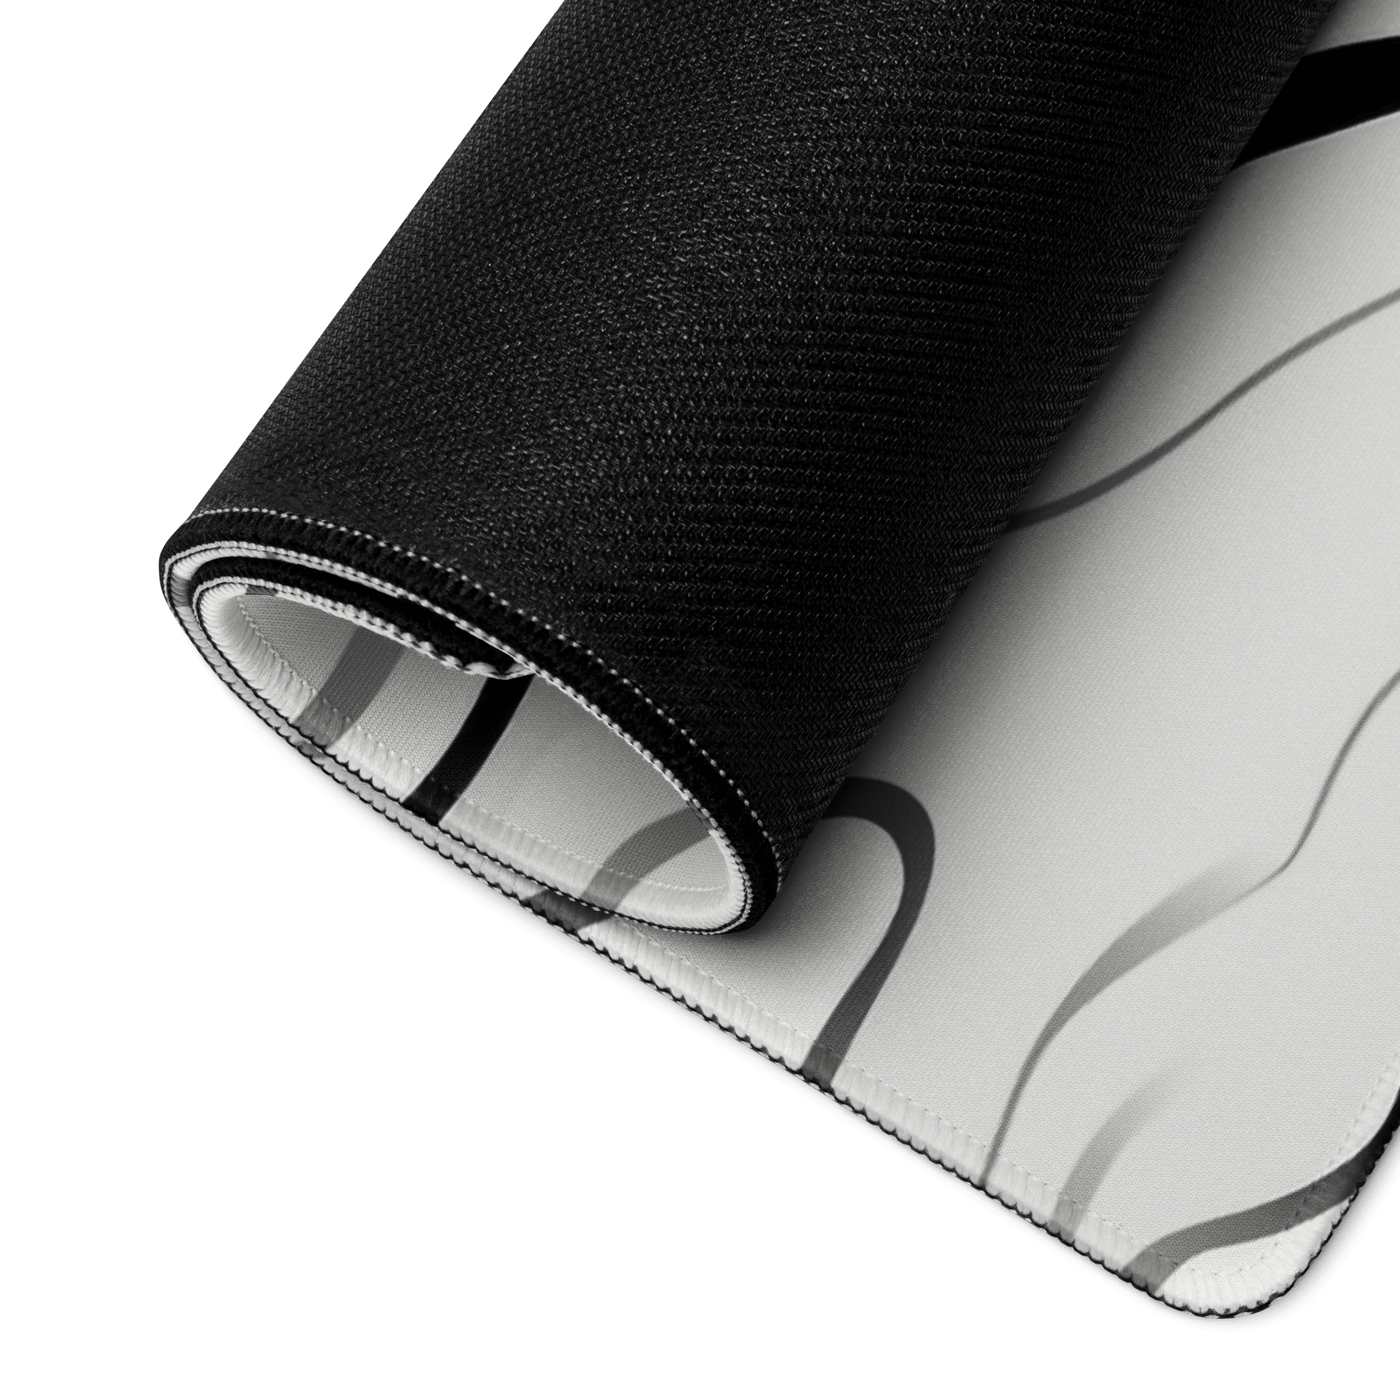 Premium Gaming Mouse Pad | Black'n White Swirl Line Art 5